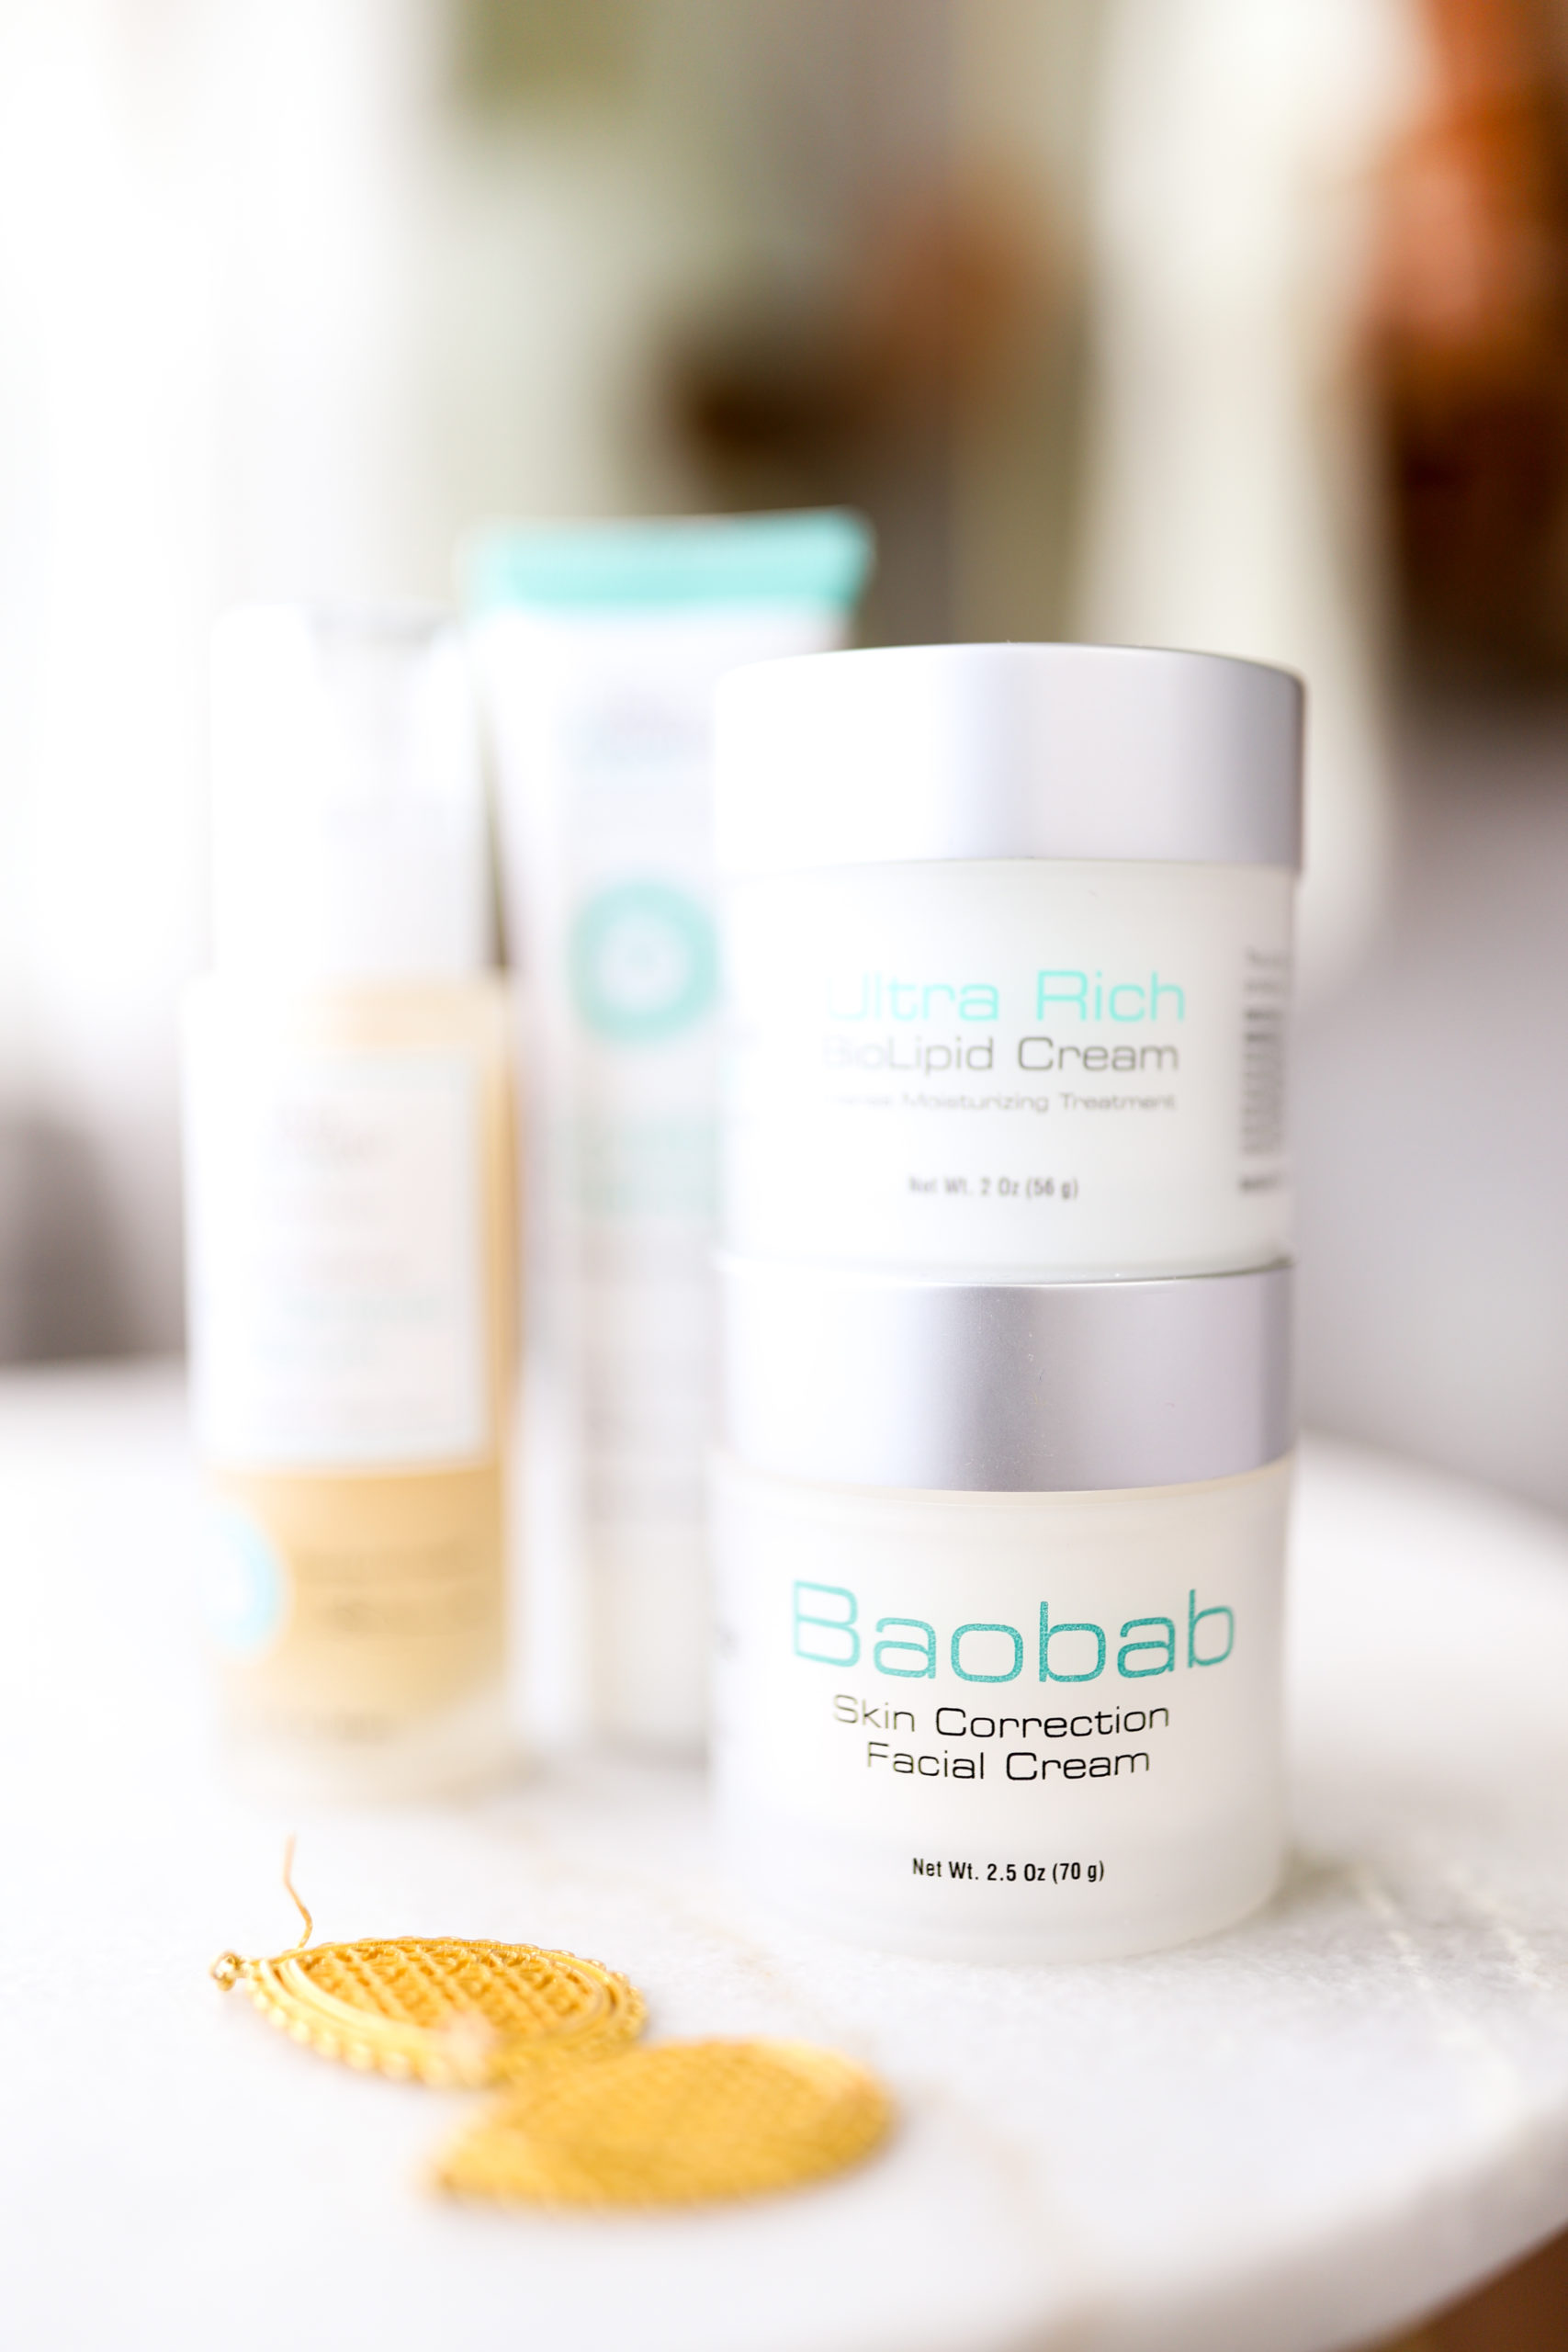 Baobab antioxidant cream for anti-aging skin | skincare tips | skincare